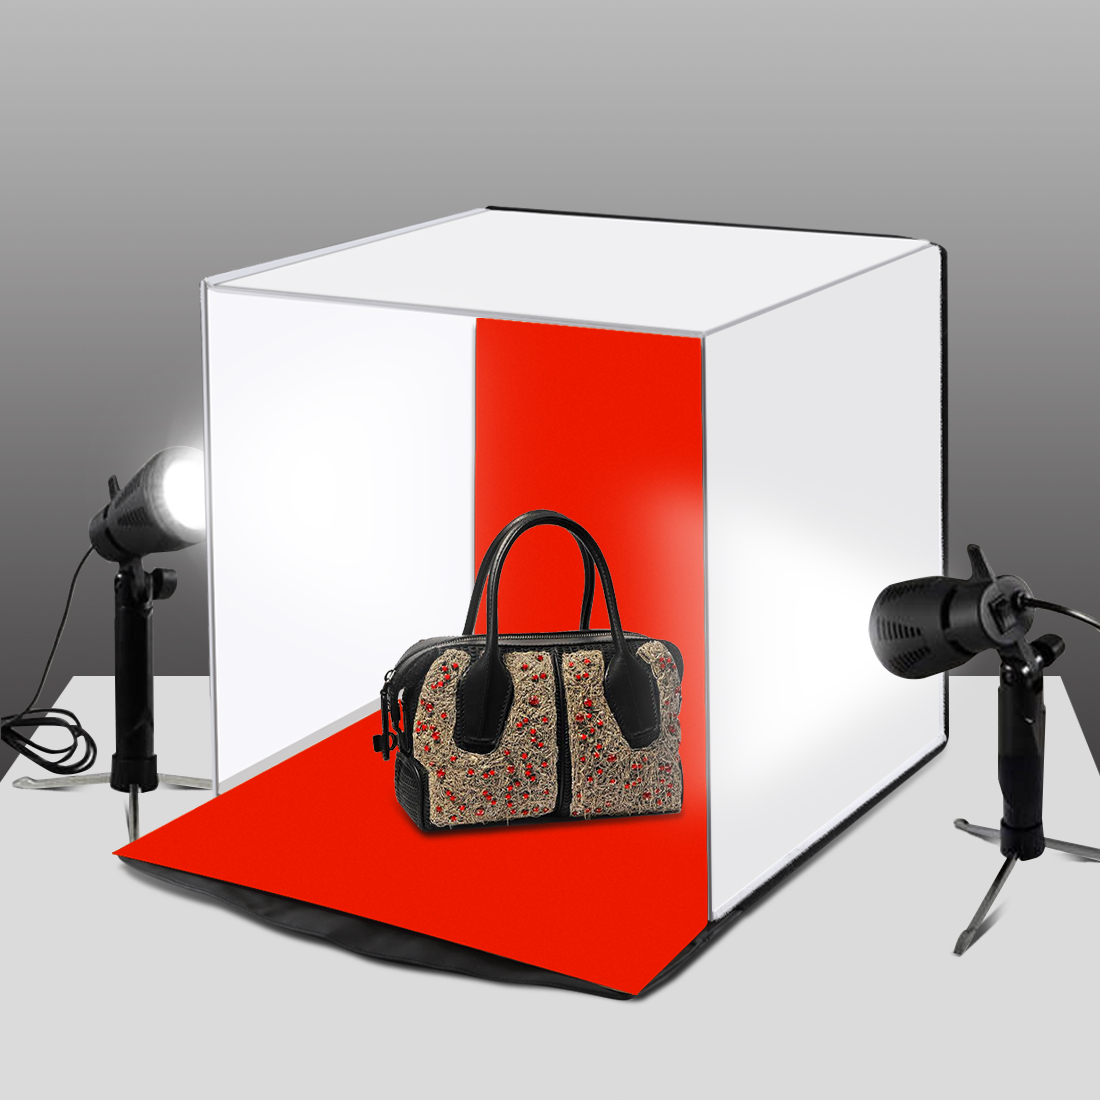 PULUZ PU5140 Photo Softbox 40cm Portable Folding Studio Shooting Tent Box Kits with 5 Color Backdrop